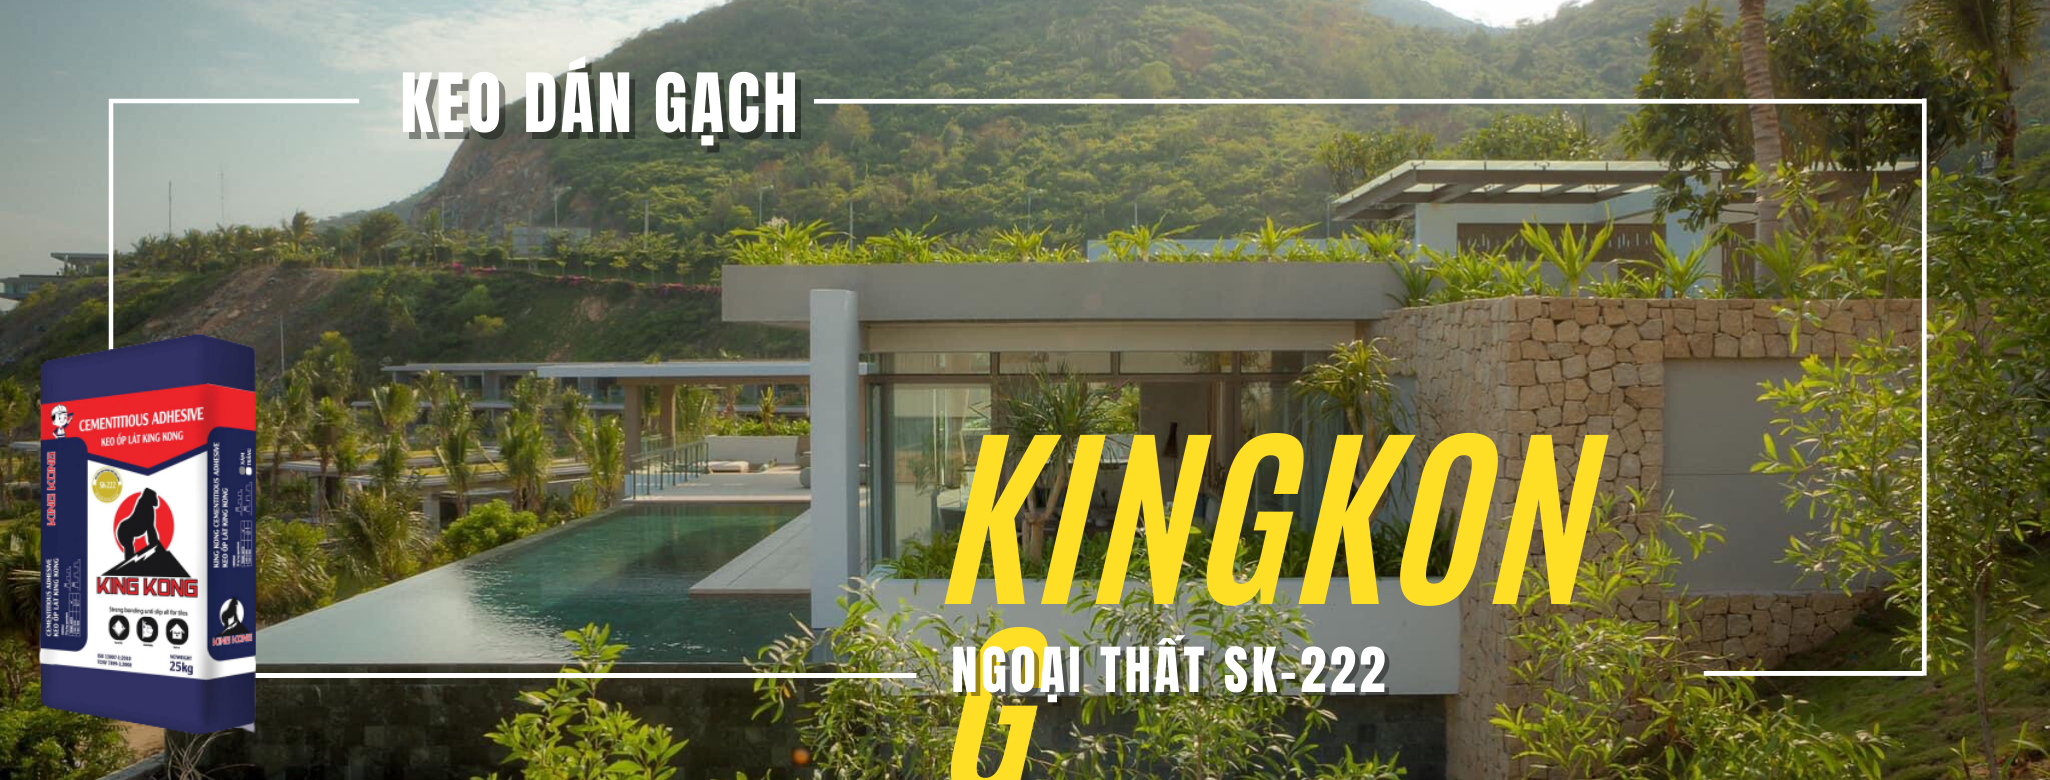 keo-dan-gach-KingKong